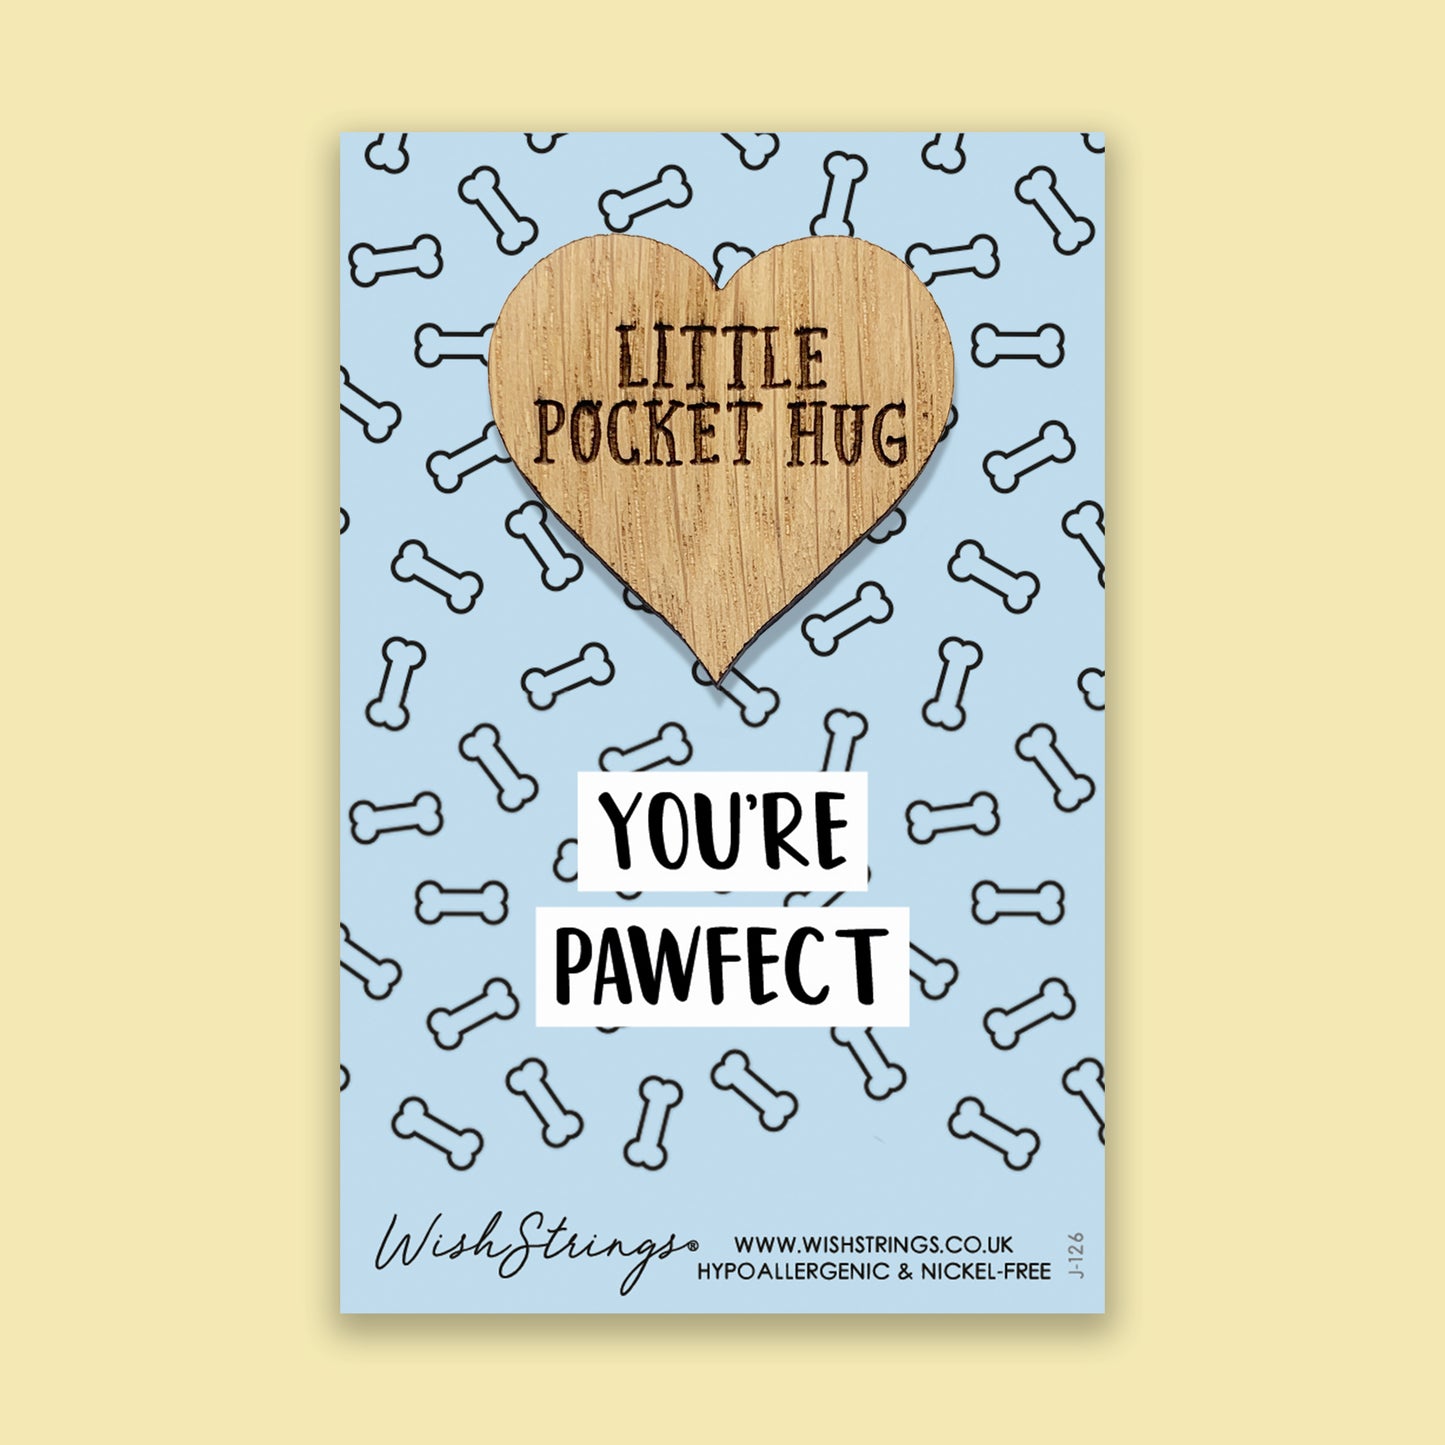 You're Pawfect - Little Pocket Hug - Wooden Heart Keepsake Token